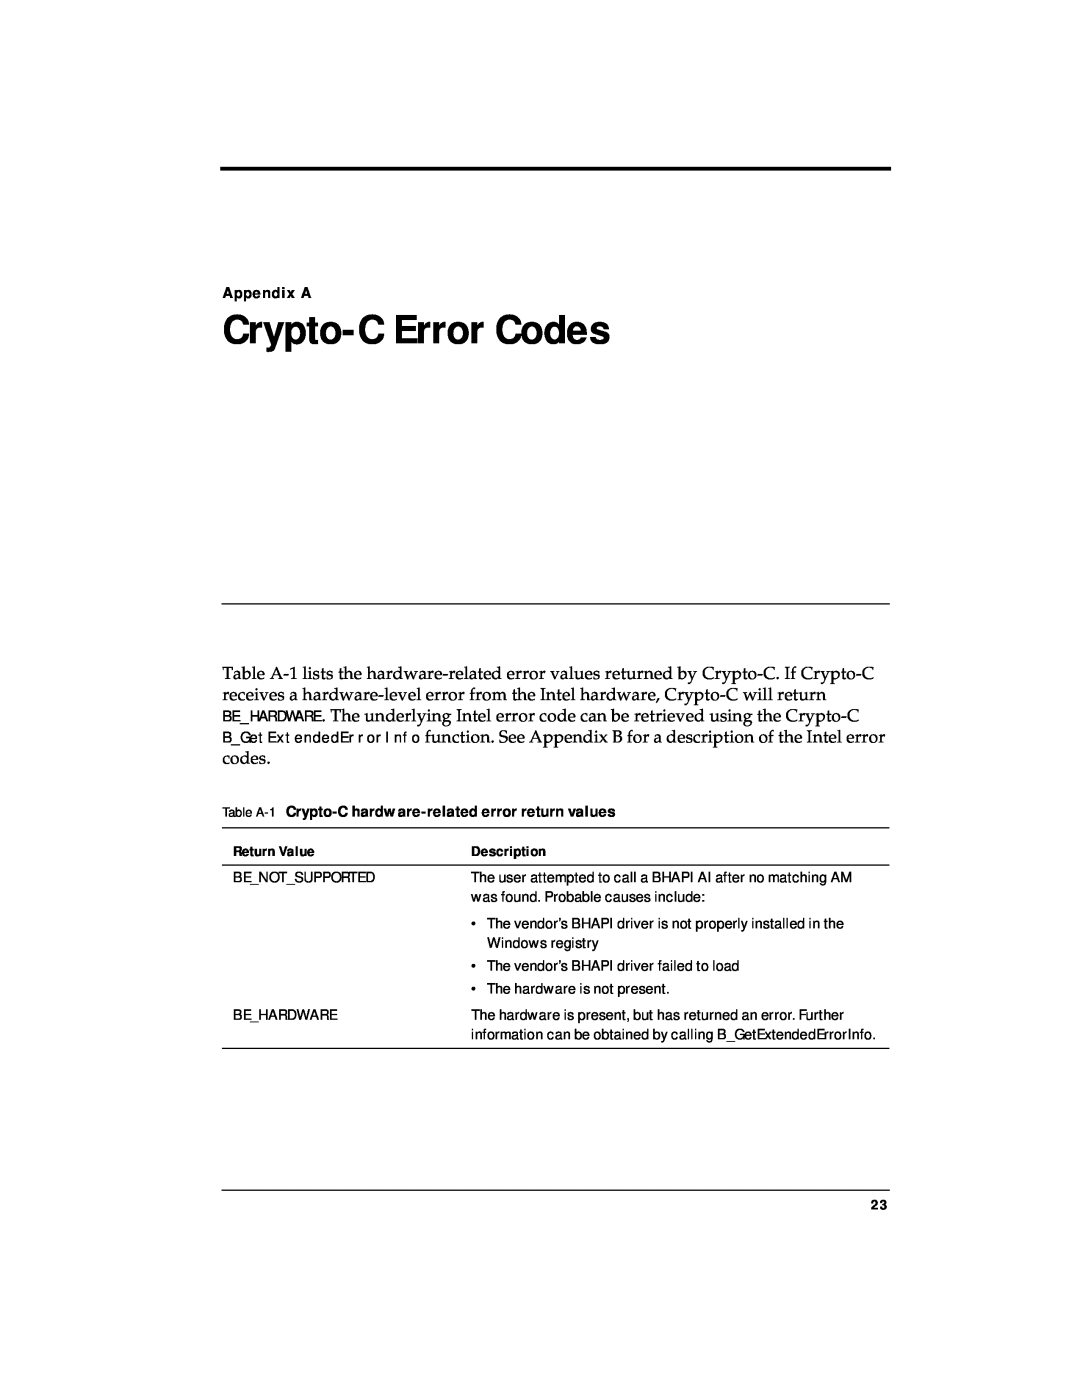 RSA Security 4.3 manual Crypto-CError Codes, Appendix A 